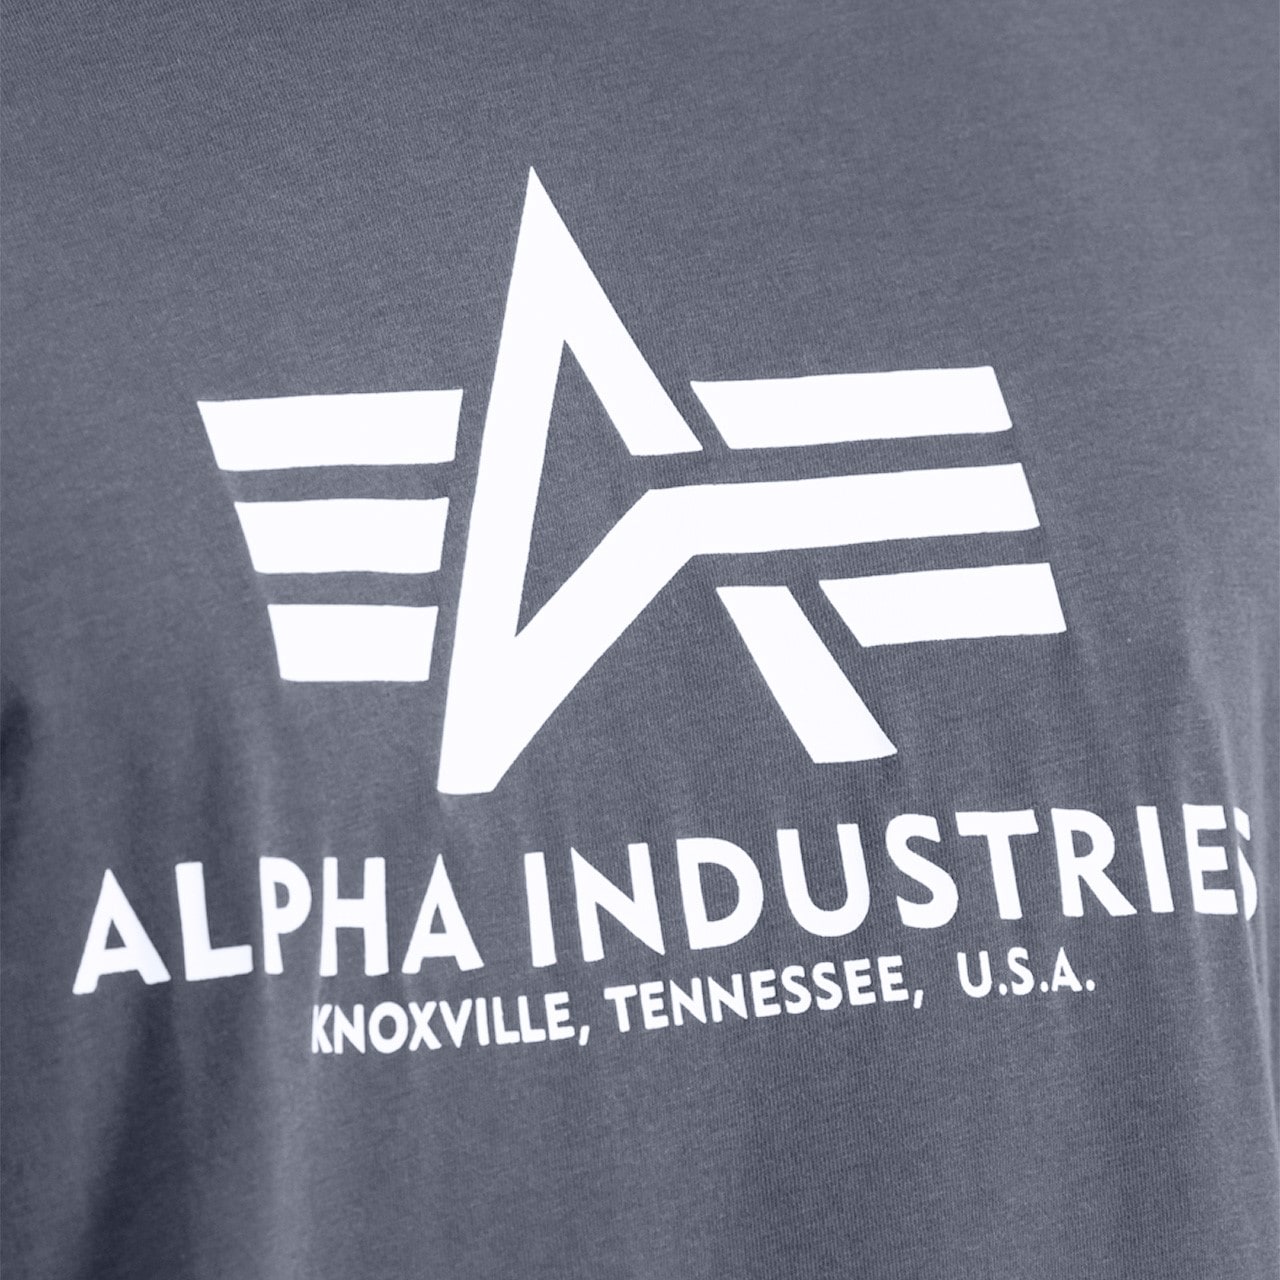 Футболка T-Shirt Alpha Industries Basic - Grey/Black